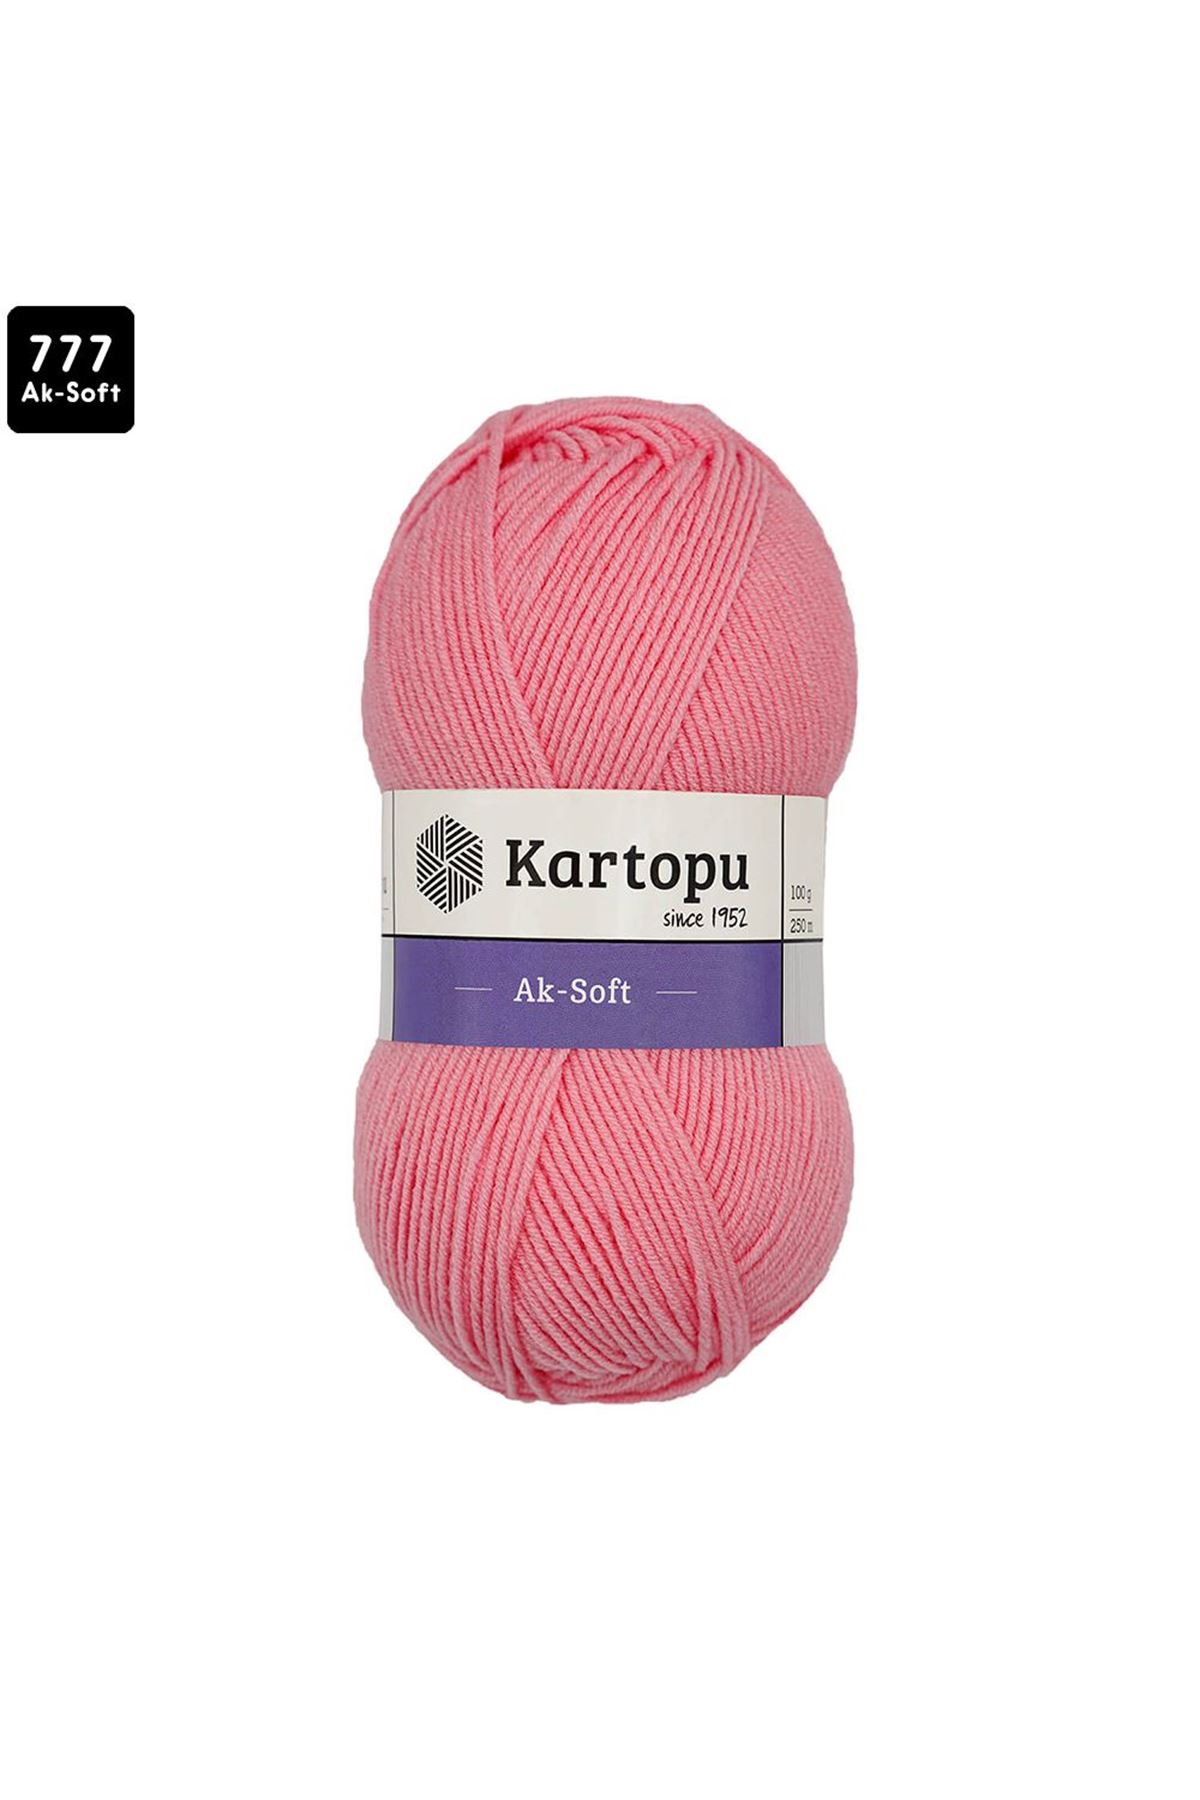 Kartopu Ak-Soft Renk No:777